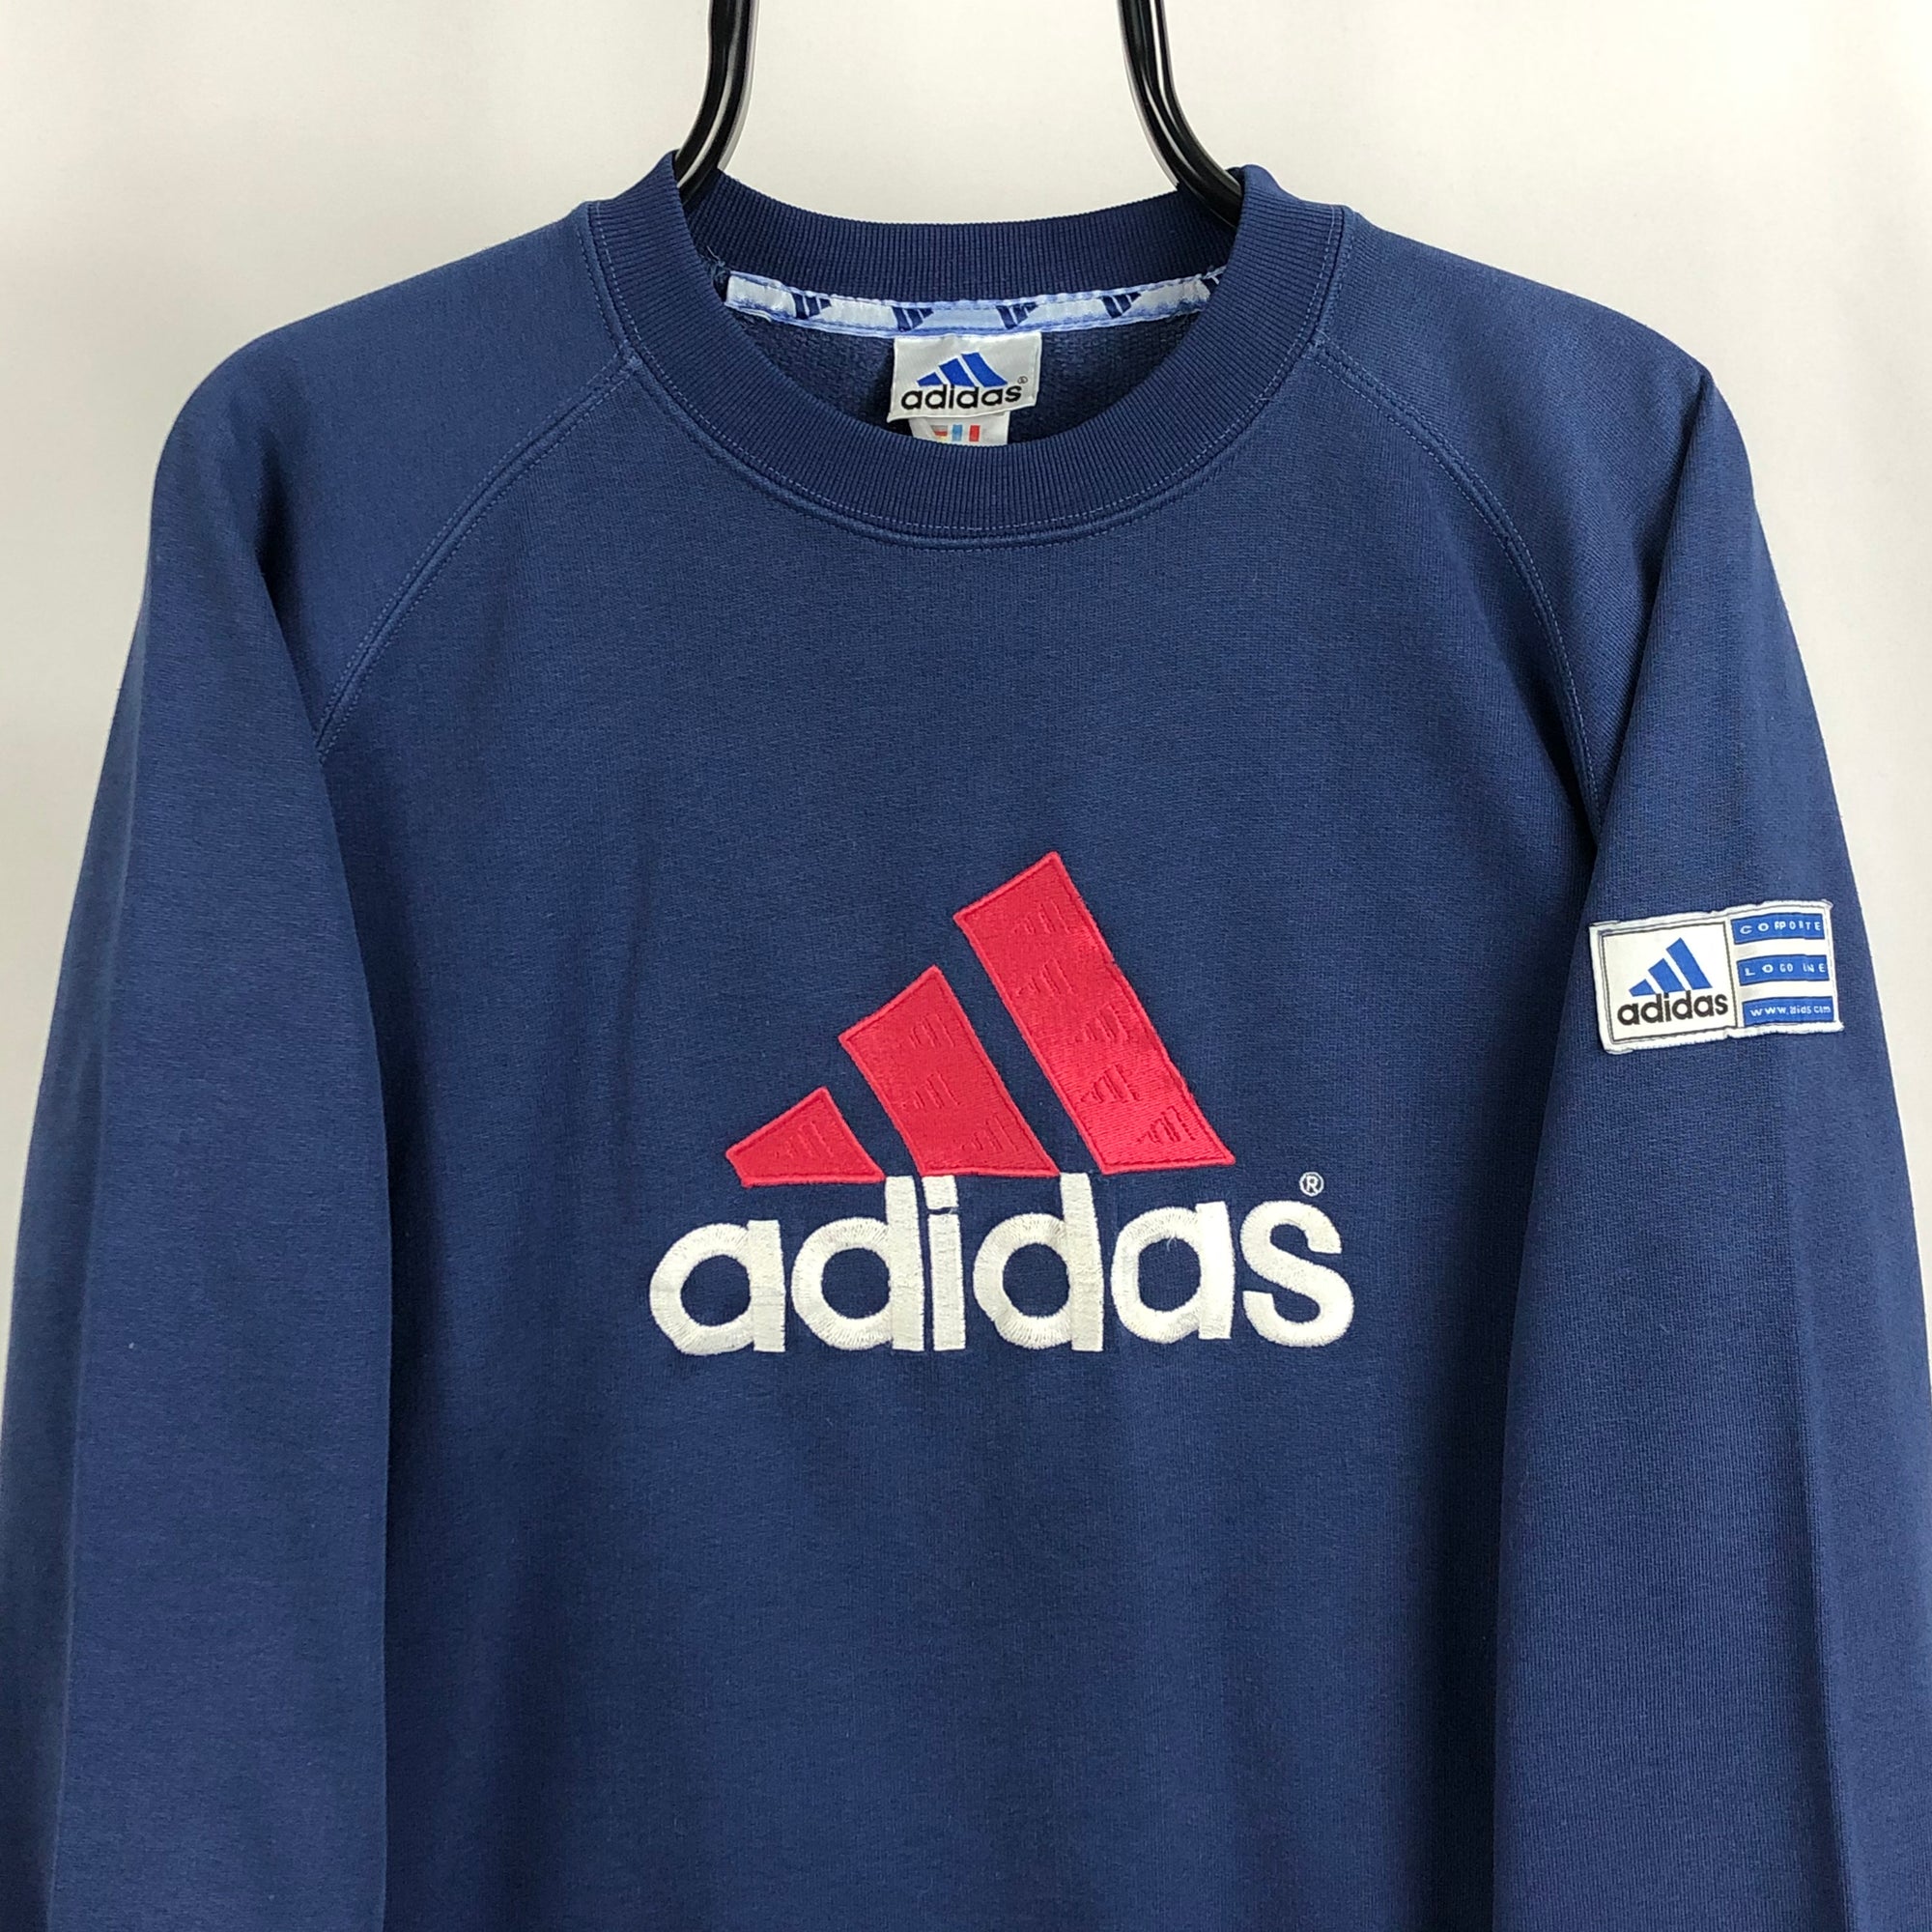 Vintage 90s Adidas Spellout Sweatshirt in Navy/Red - Men's Small/Women's Medium